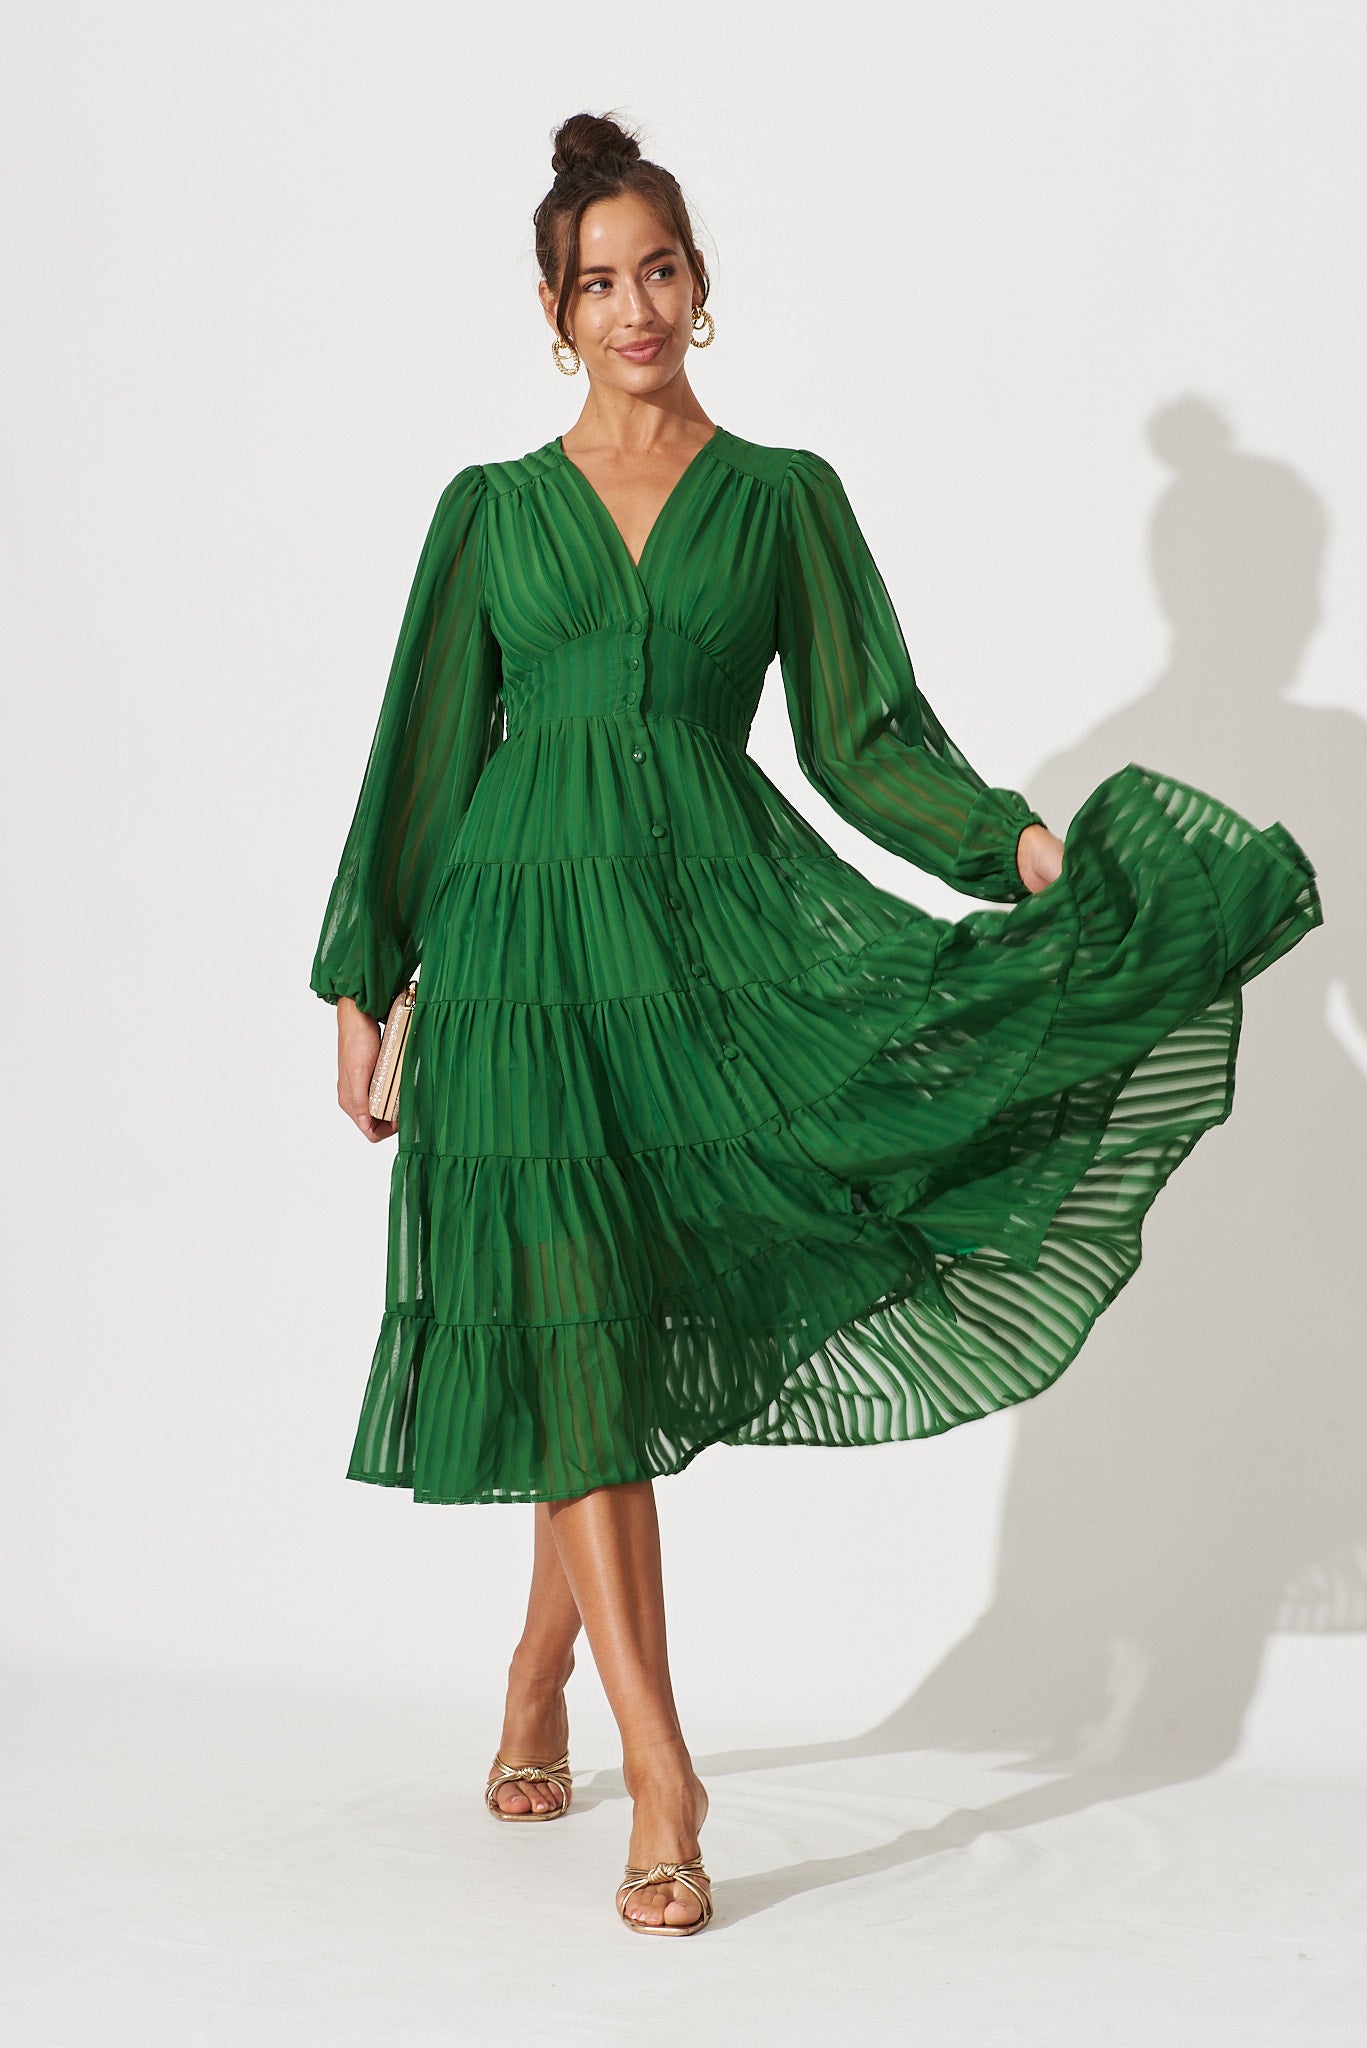 Modical Midi Dress In Green Chiffon - full length